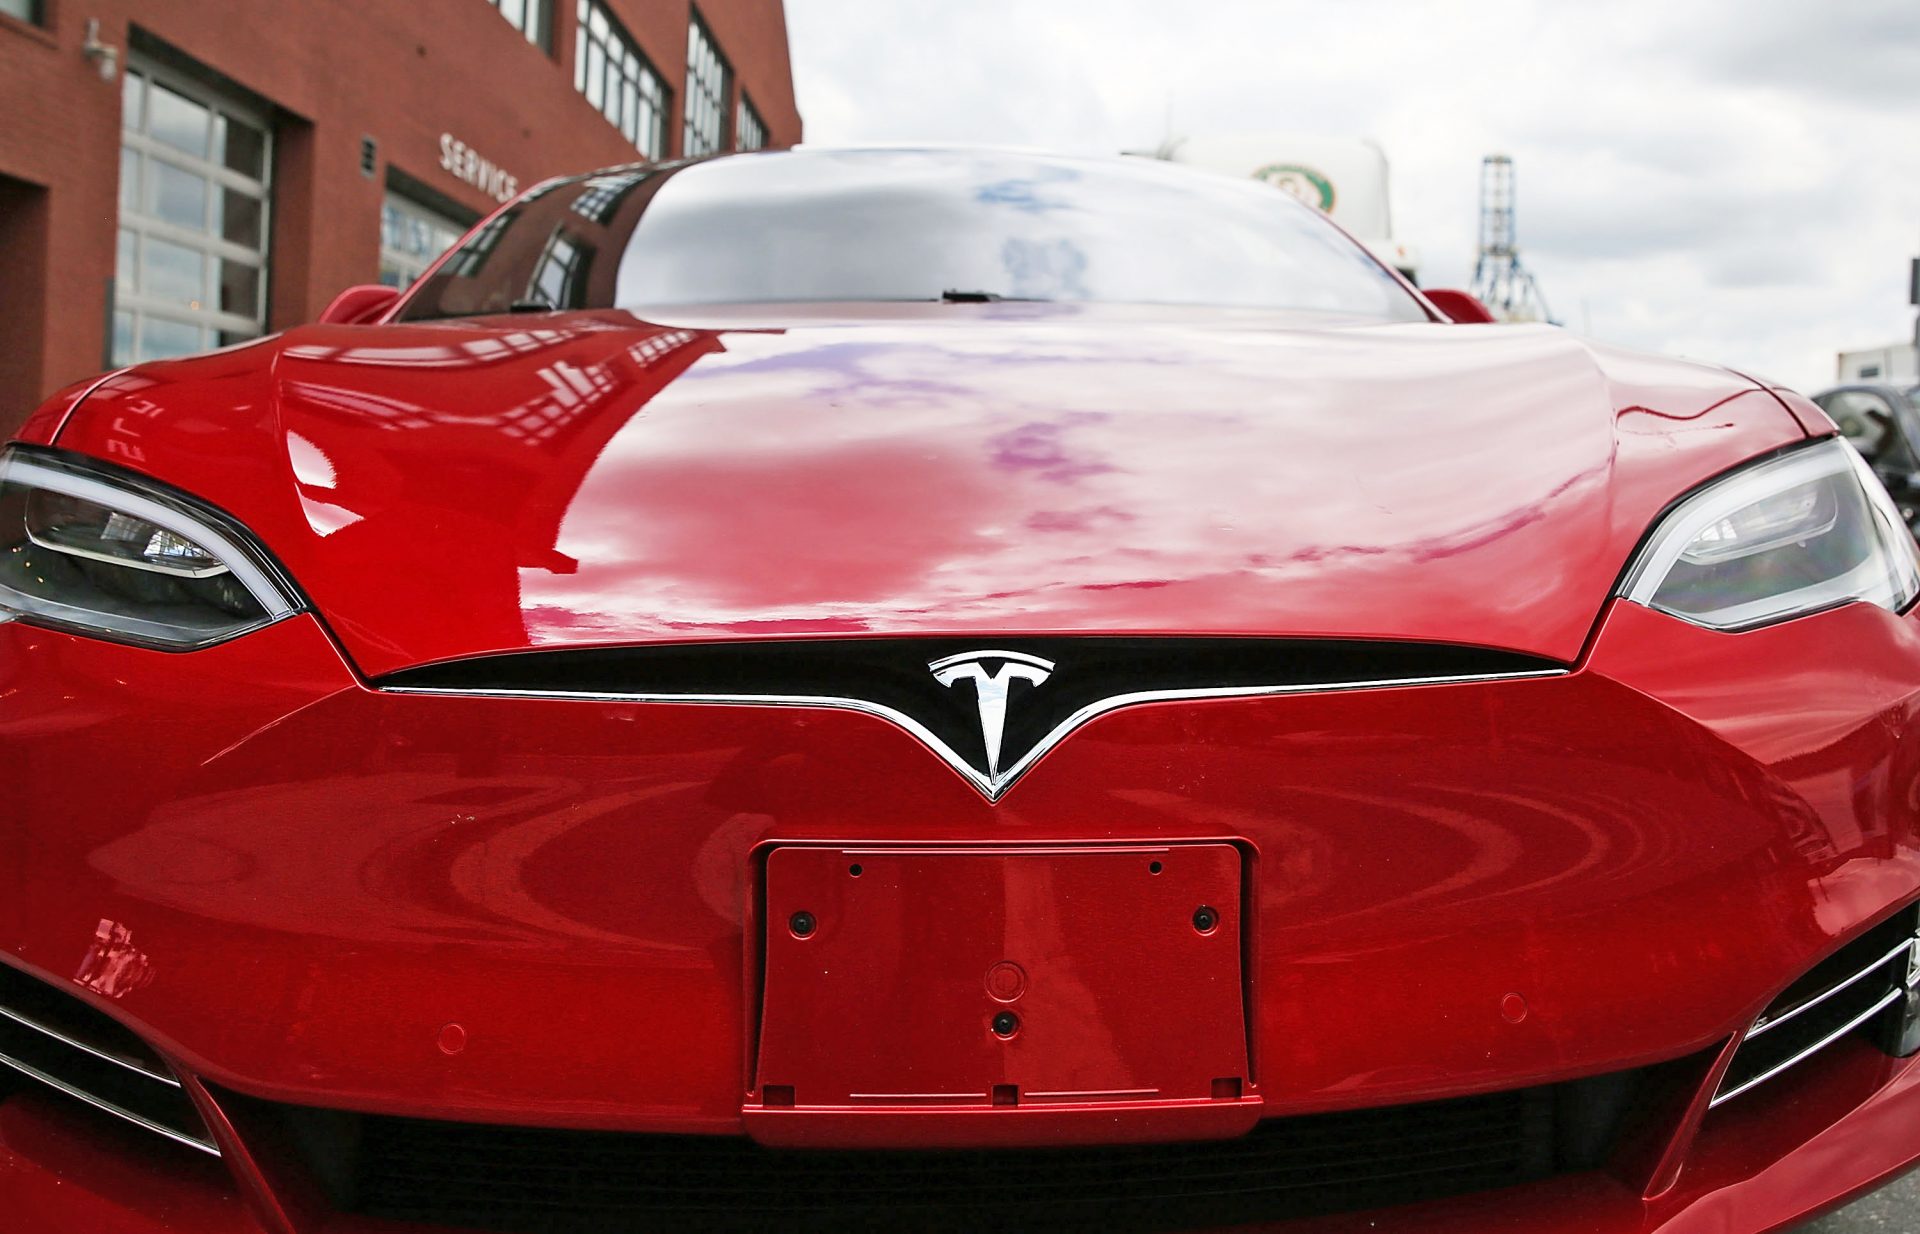 Tesla settles with ex-employee over Autopilot code theft accusations